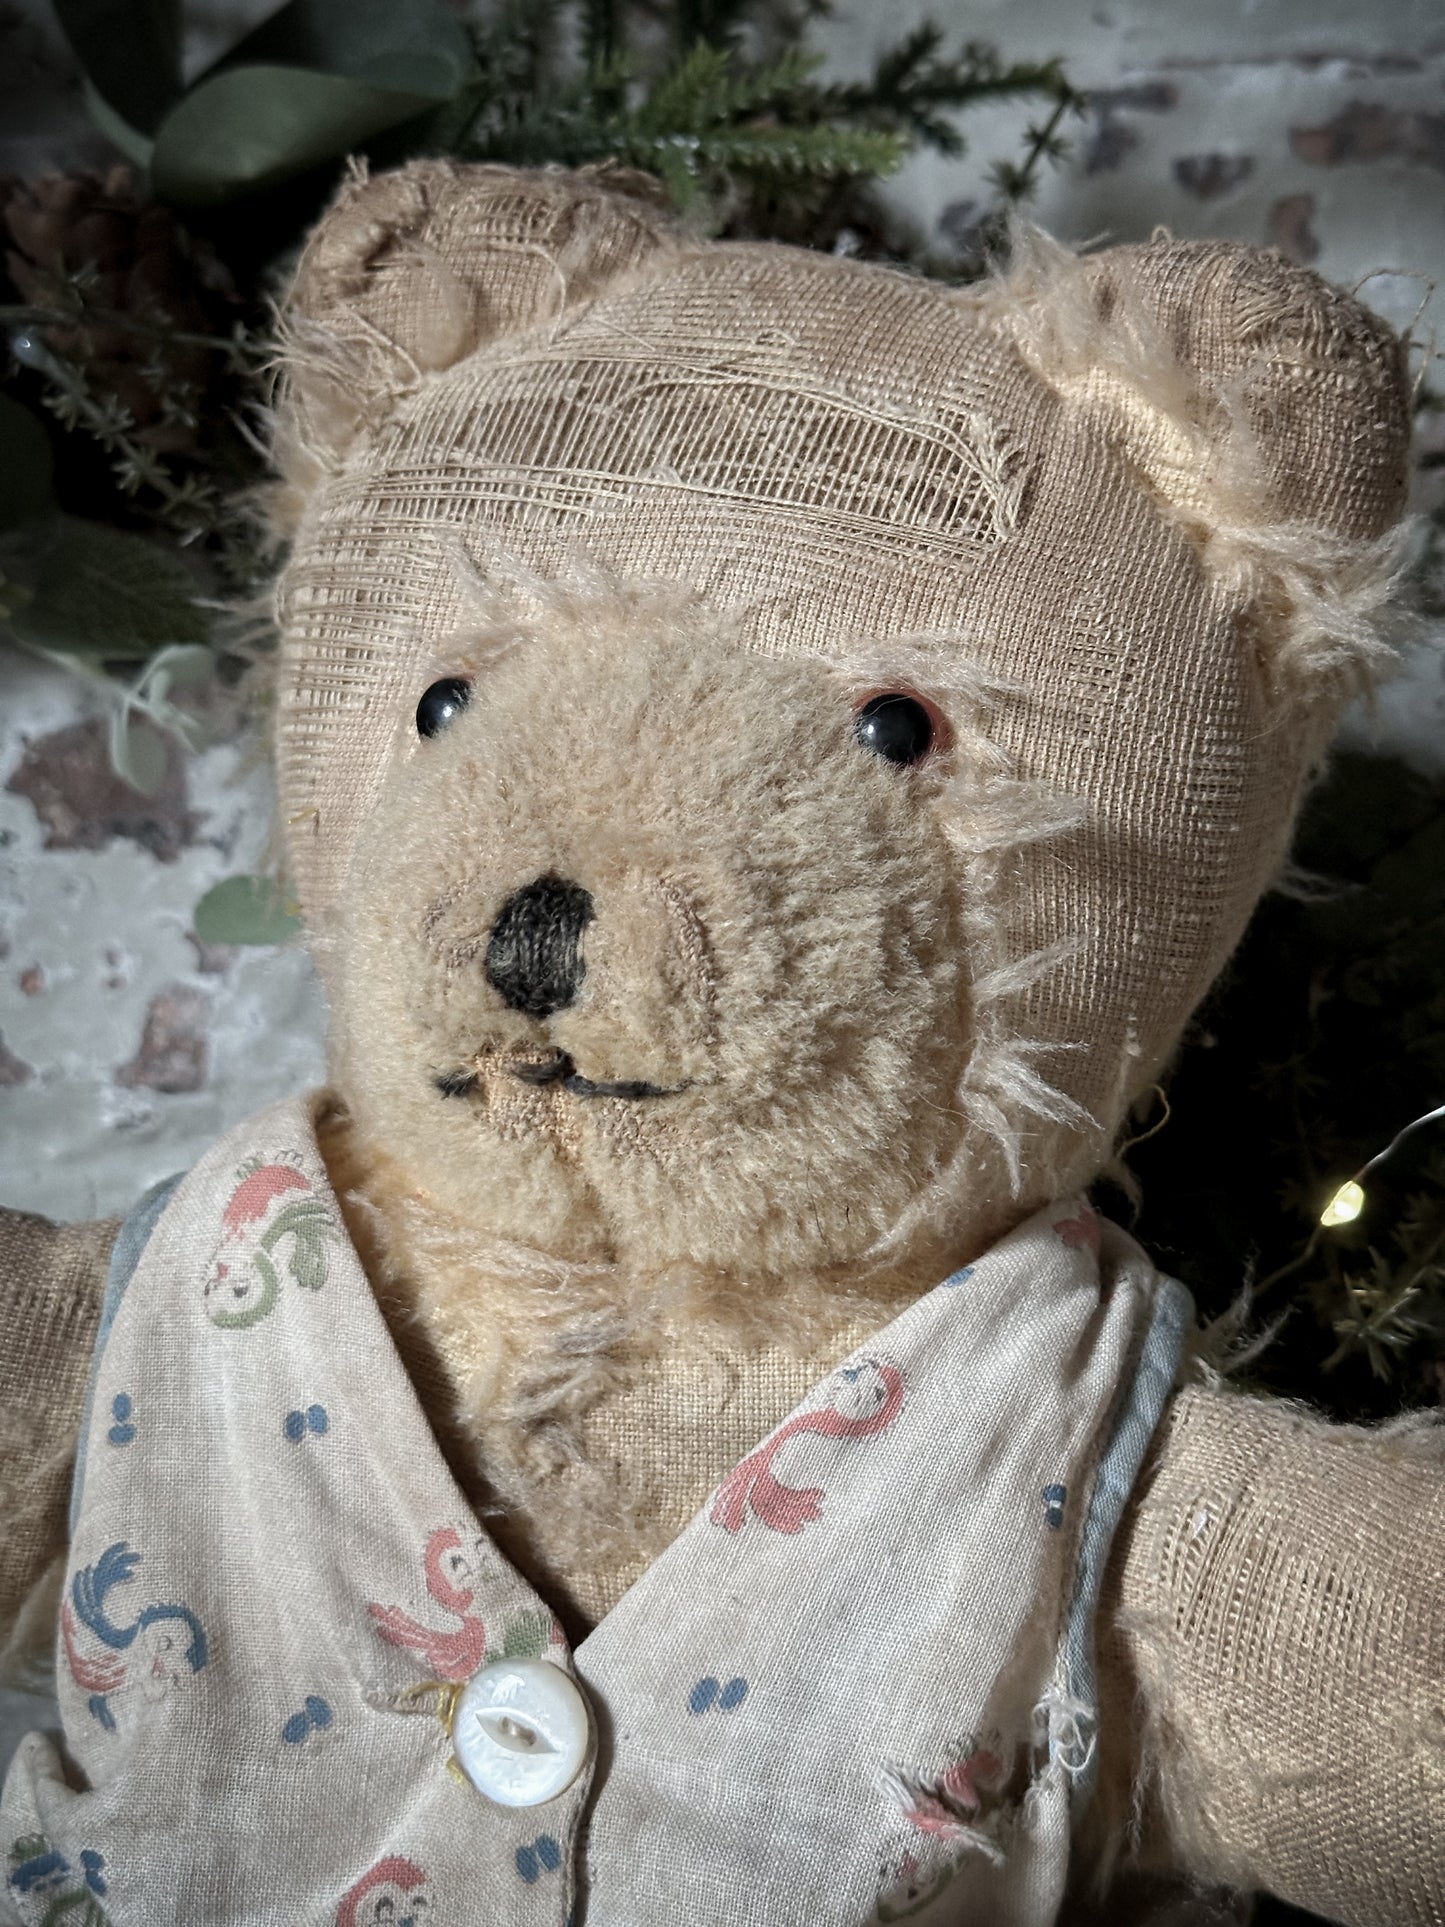 A lovely antique teddy made in original cotton pyjamas